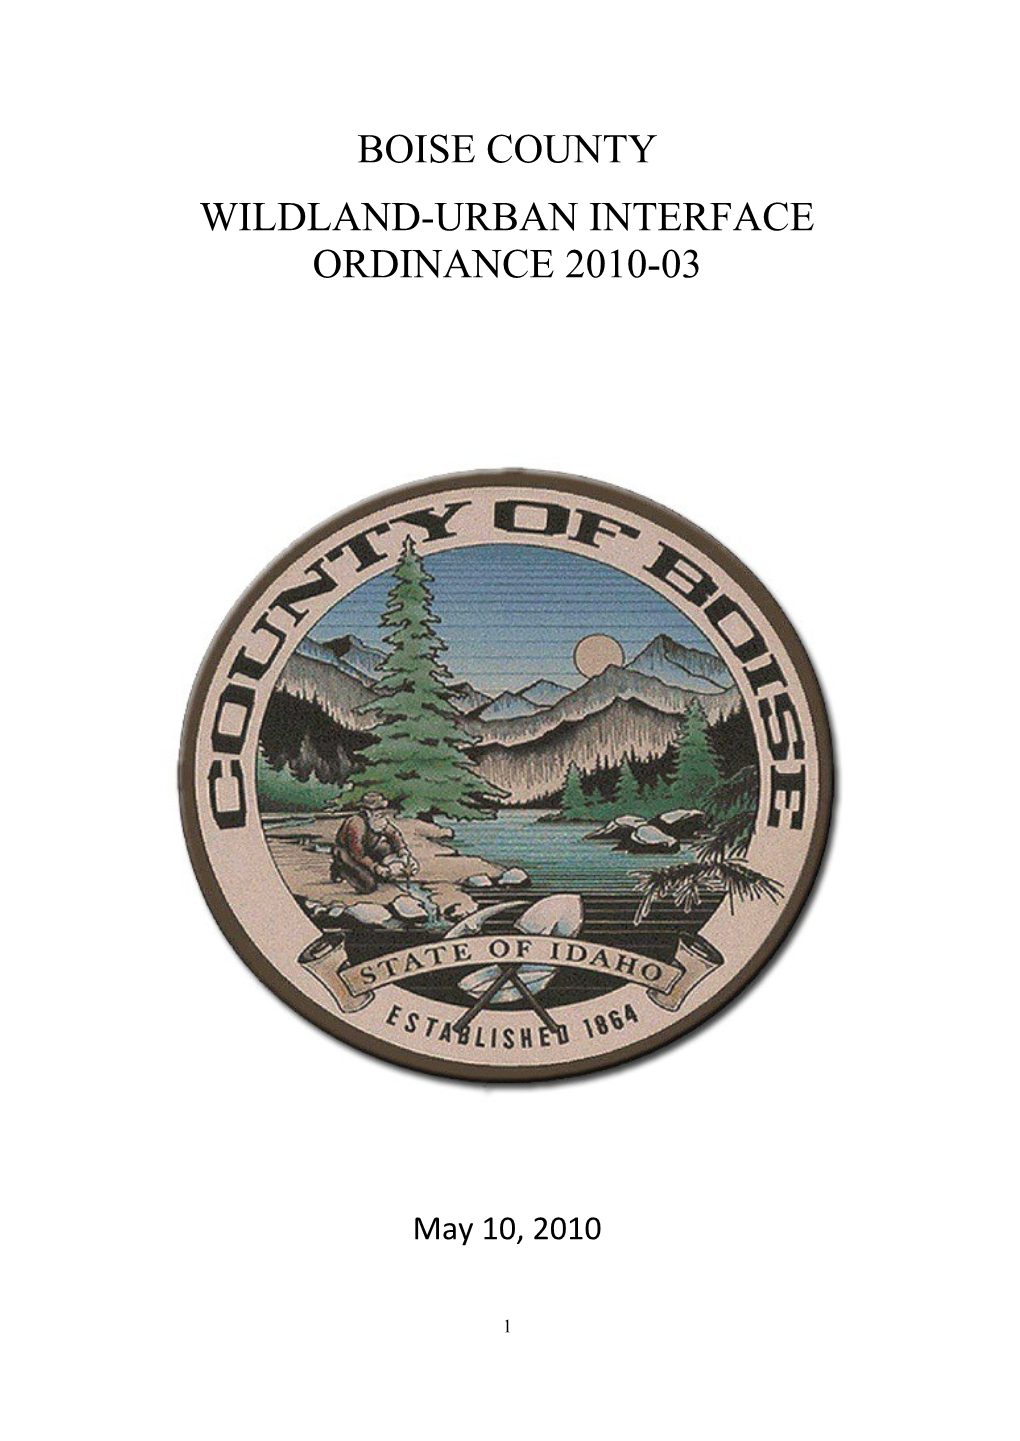 Wildland-Urbaninterface Ordinance 2010-03